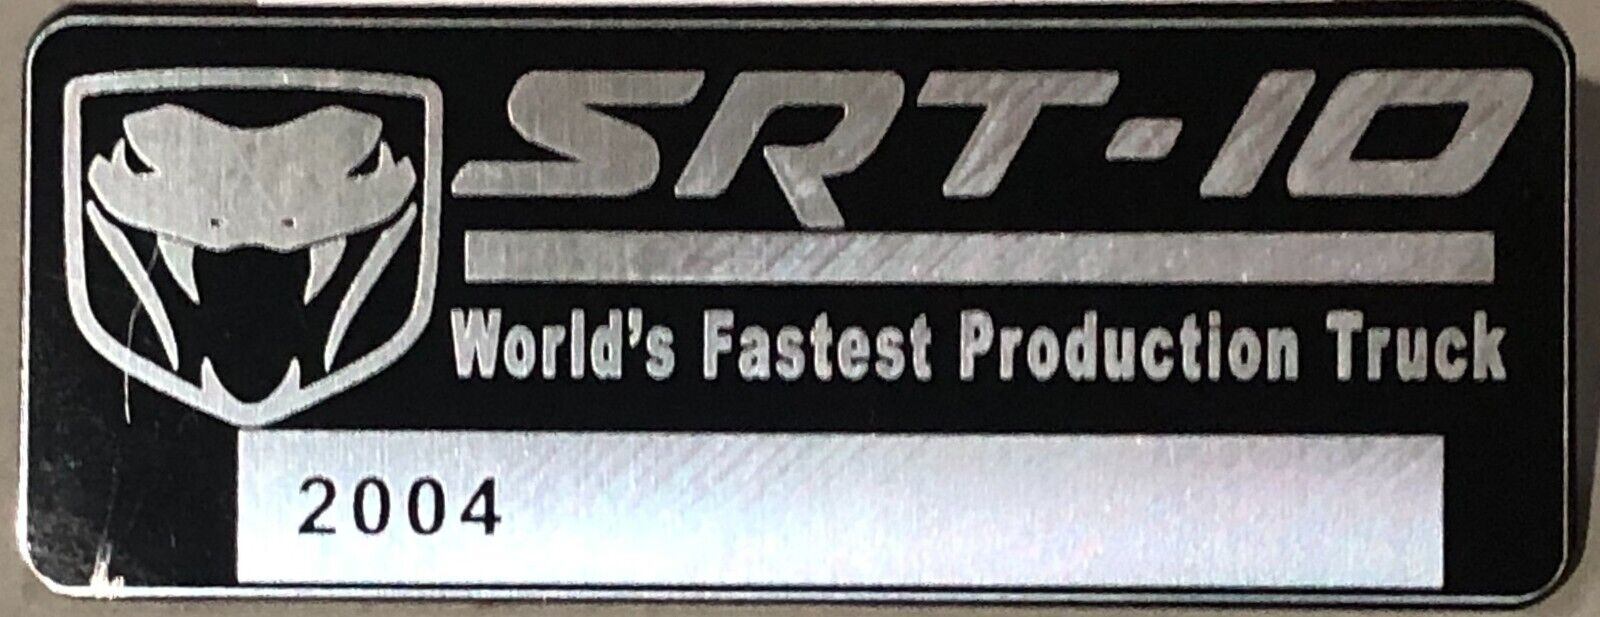 Dodge Ram SRT-10 Fastest Production Truck AL Plate Tag Vehicle # Free V10 Viper